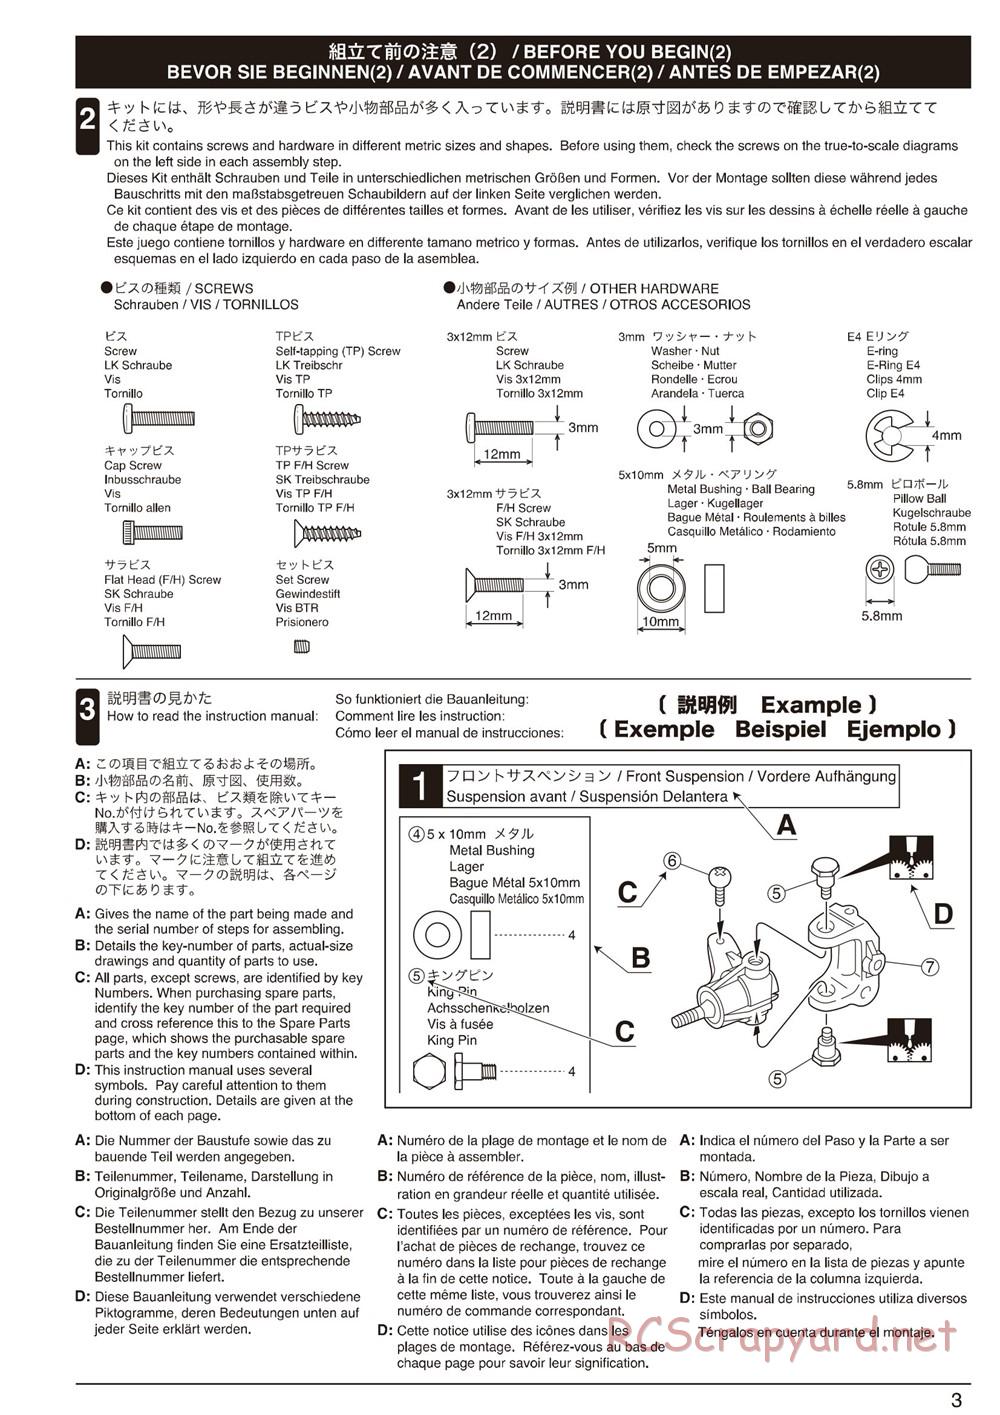 Kyosho - Ultima-SC - Manual - Page 3